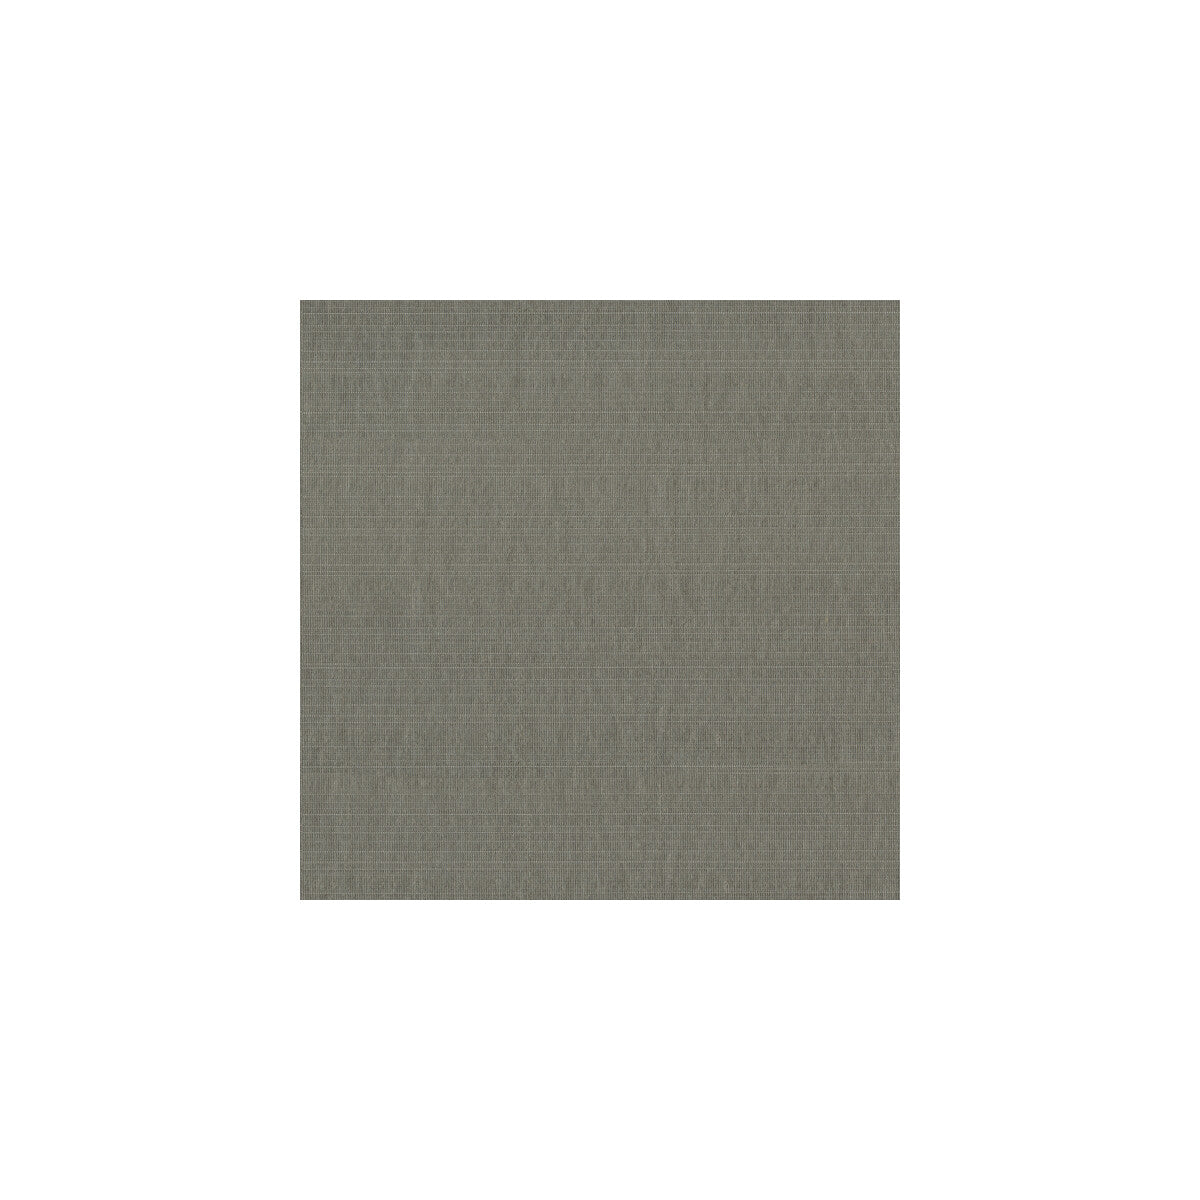 Kravet Basics fabric in 3697-11 color - pattern 3697.11.0 - by Kravet Basics in the Gis collection